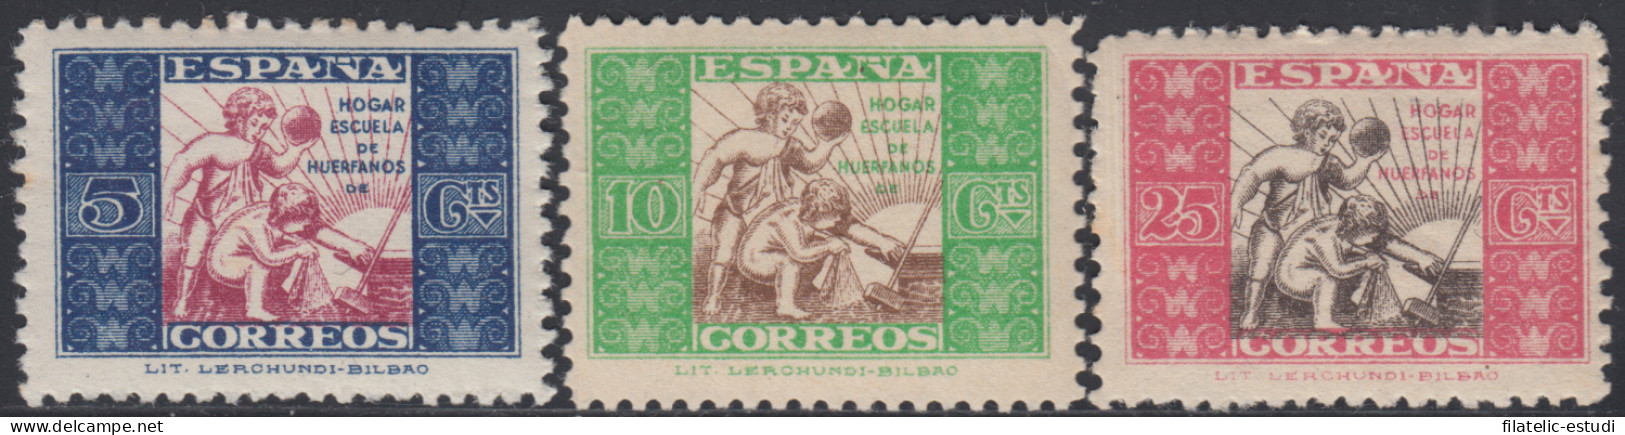 España Spain Beneficencia Huérfanos Correos 9/11 1937 Infancia MH - Bienfaisance